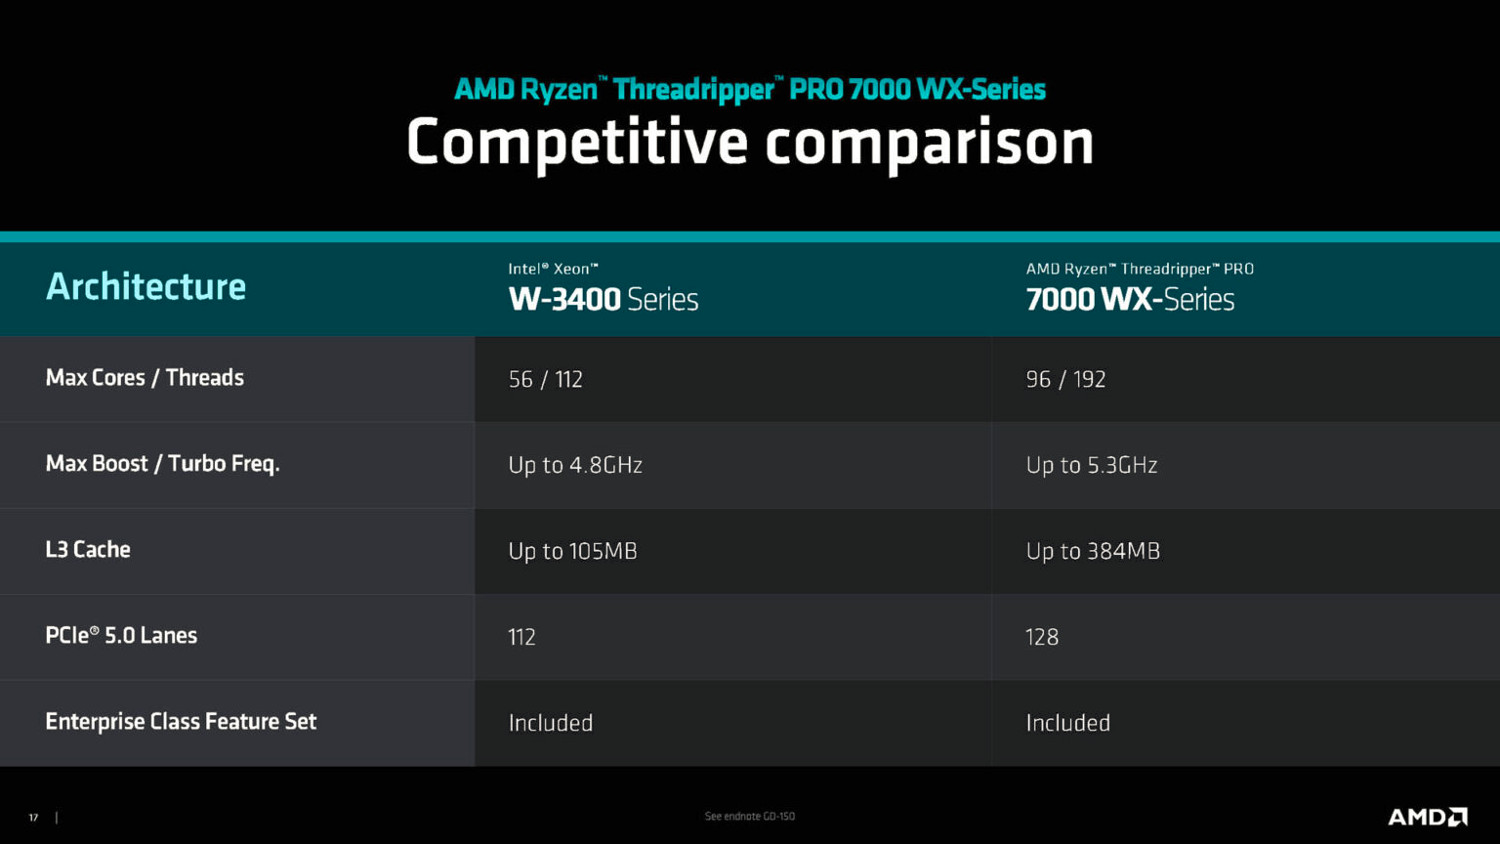 Threadripper Pro 7000 WX